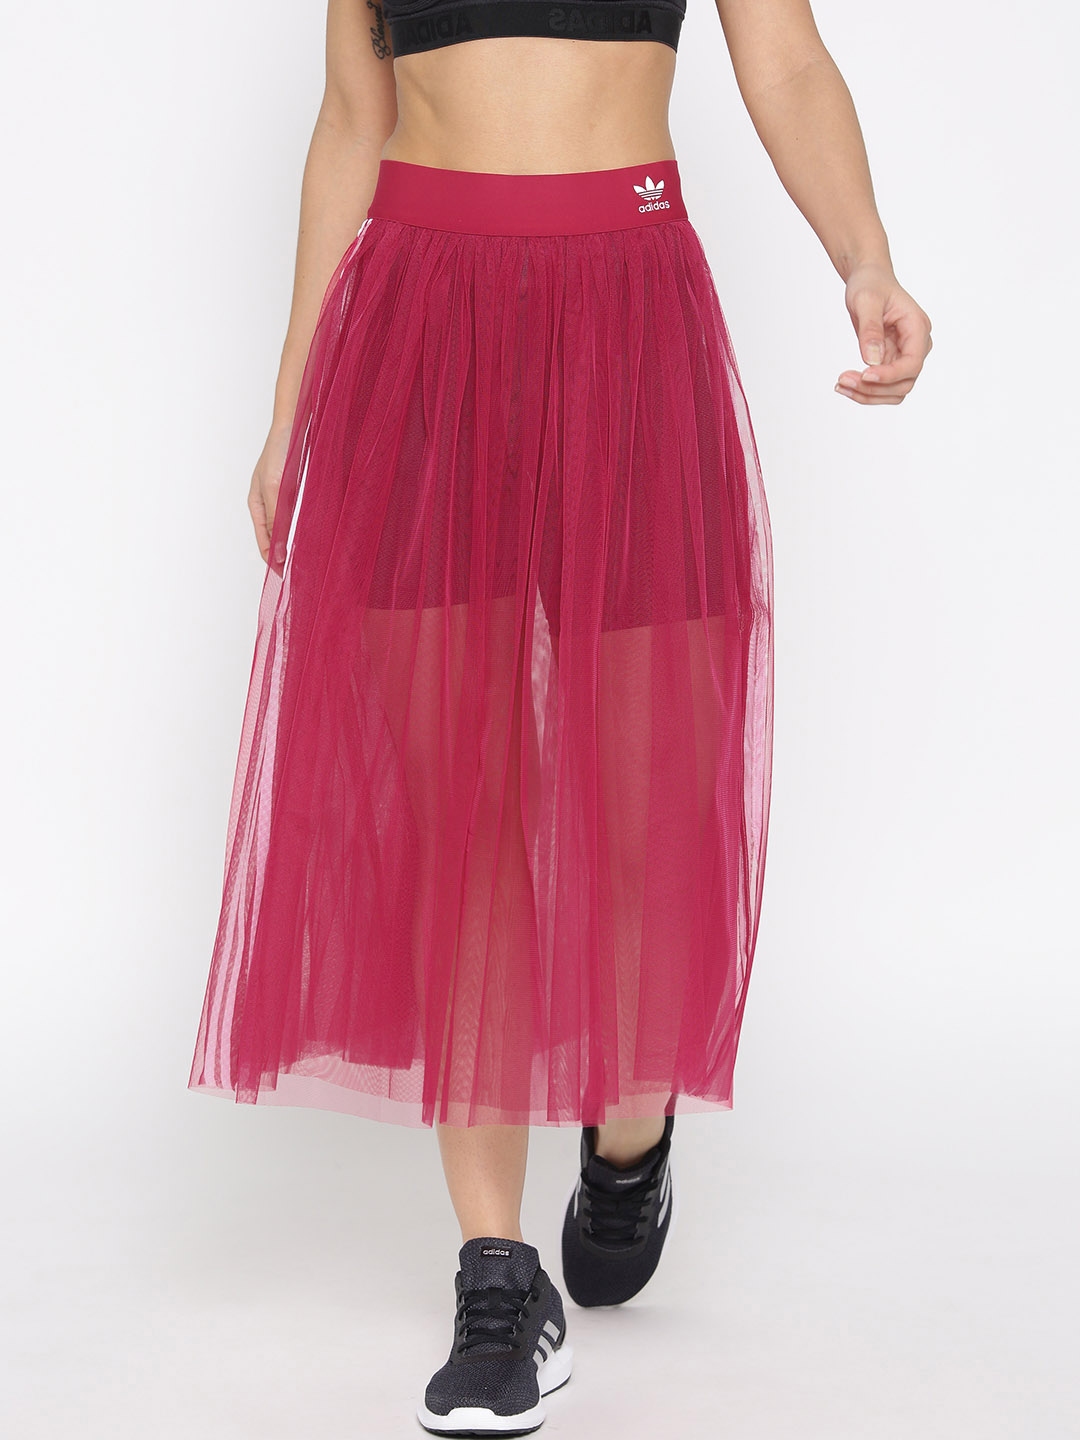 Maldito galería Chorrito Buy ADIDAS Originals Women Magenta Solid Tulle Sheer Flared Skirt - Skirts  for Women 8810675 | Myntra